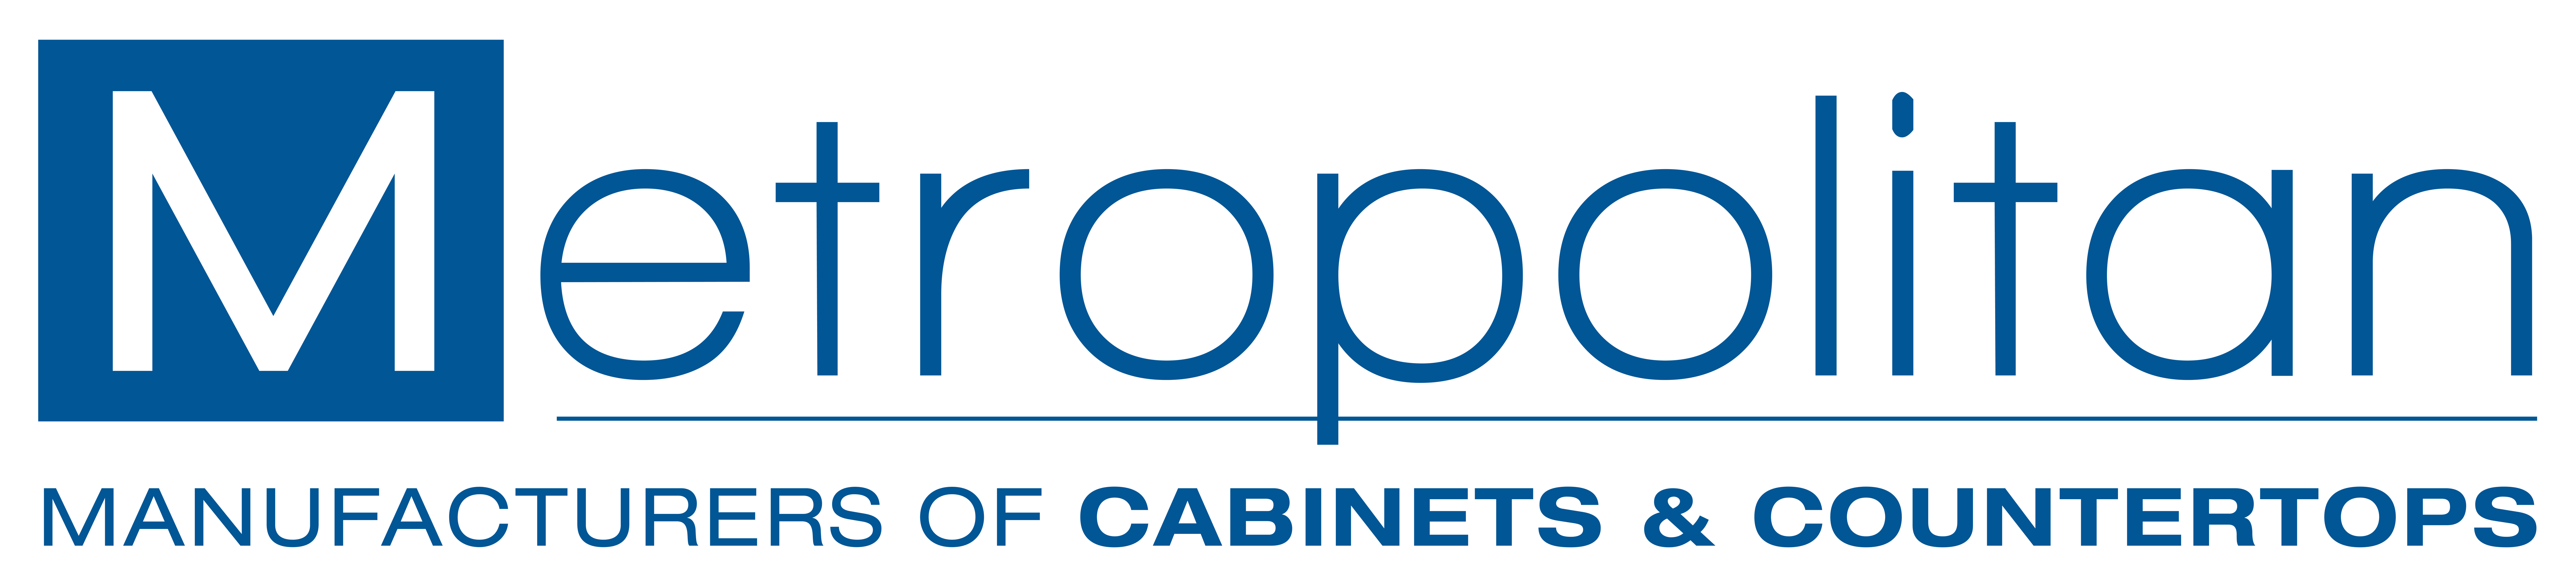 Metropolitan Manufacturers of Cabinets & Countertops